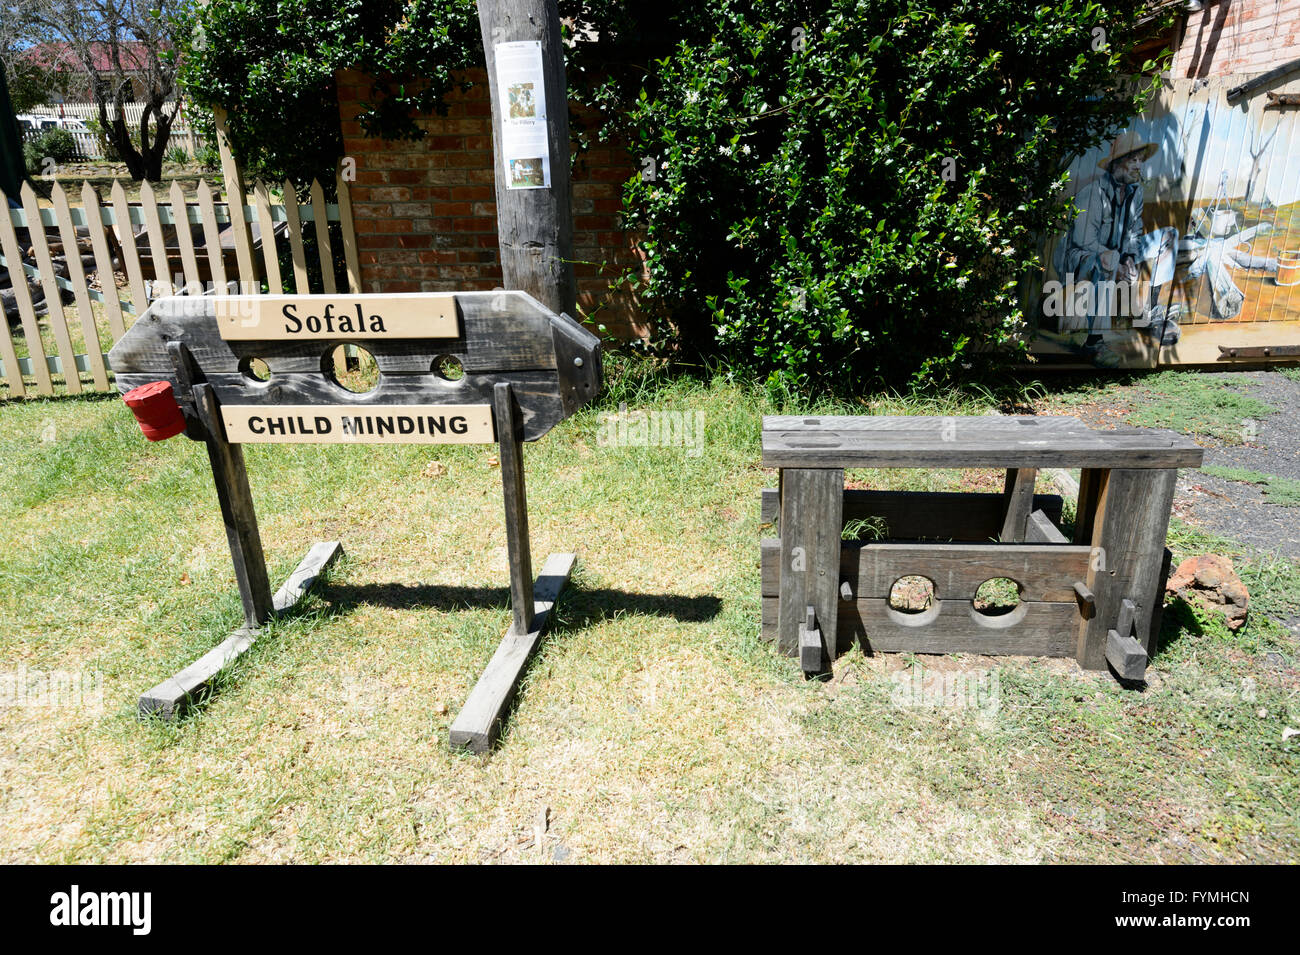 Humorvolle Kinderbetreuung Straßenschild, Aktien und Pillori, Sofala, New South Wales, Australien Stockfoto